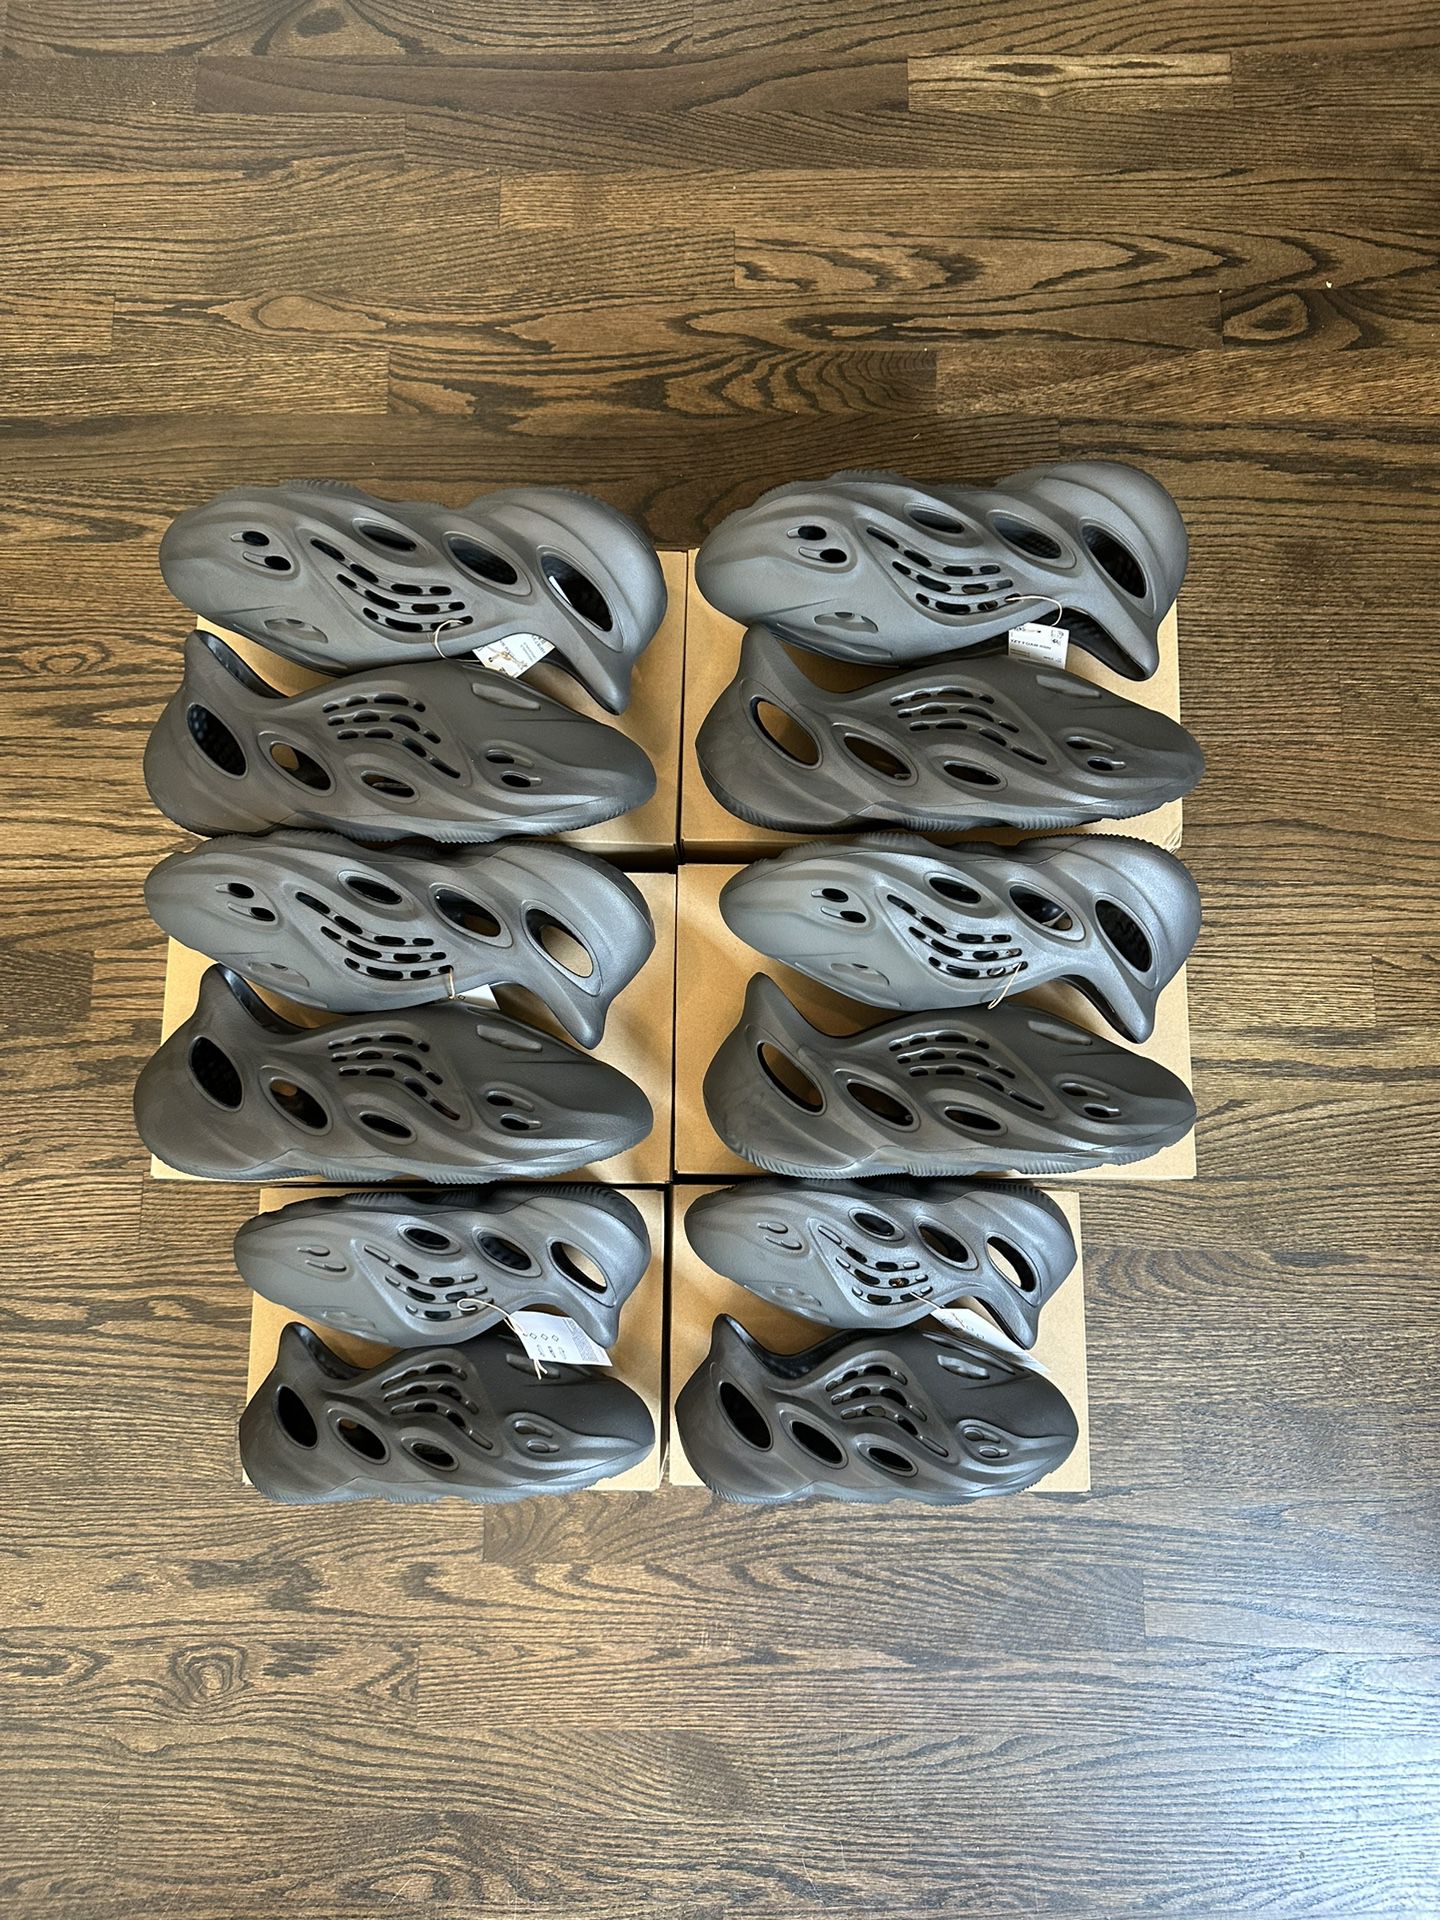 Adidas Yeezy Foam Runner Onyx Multiple Sizes